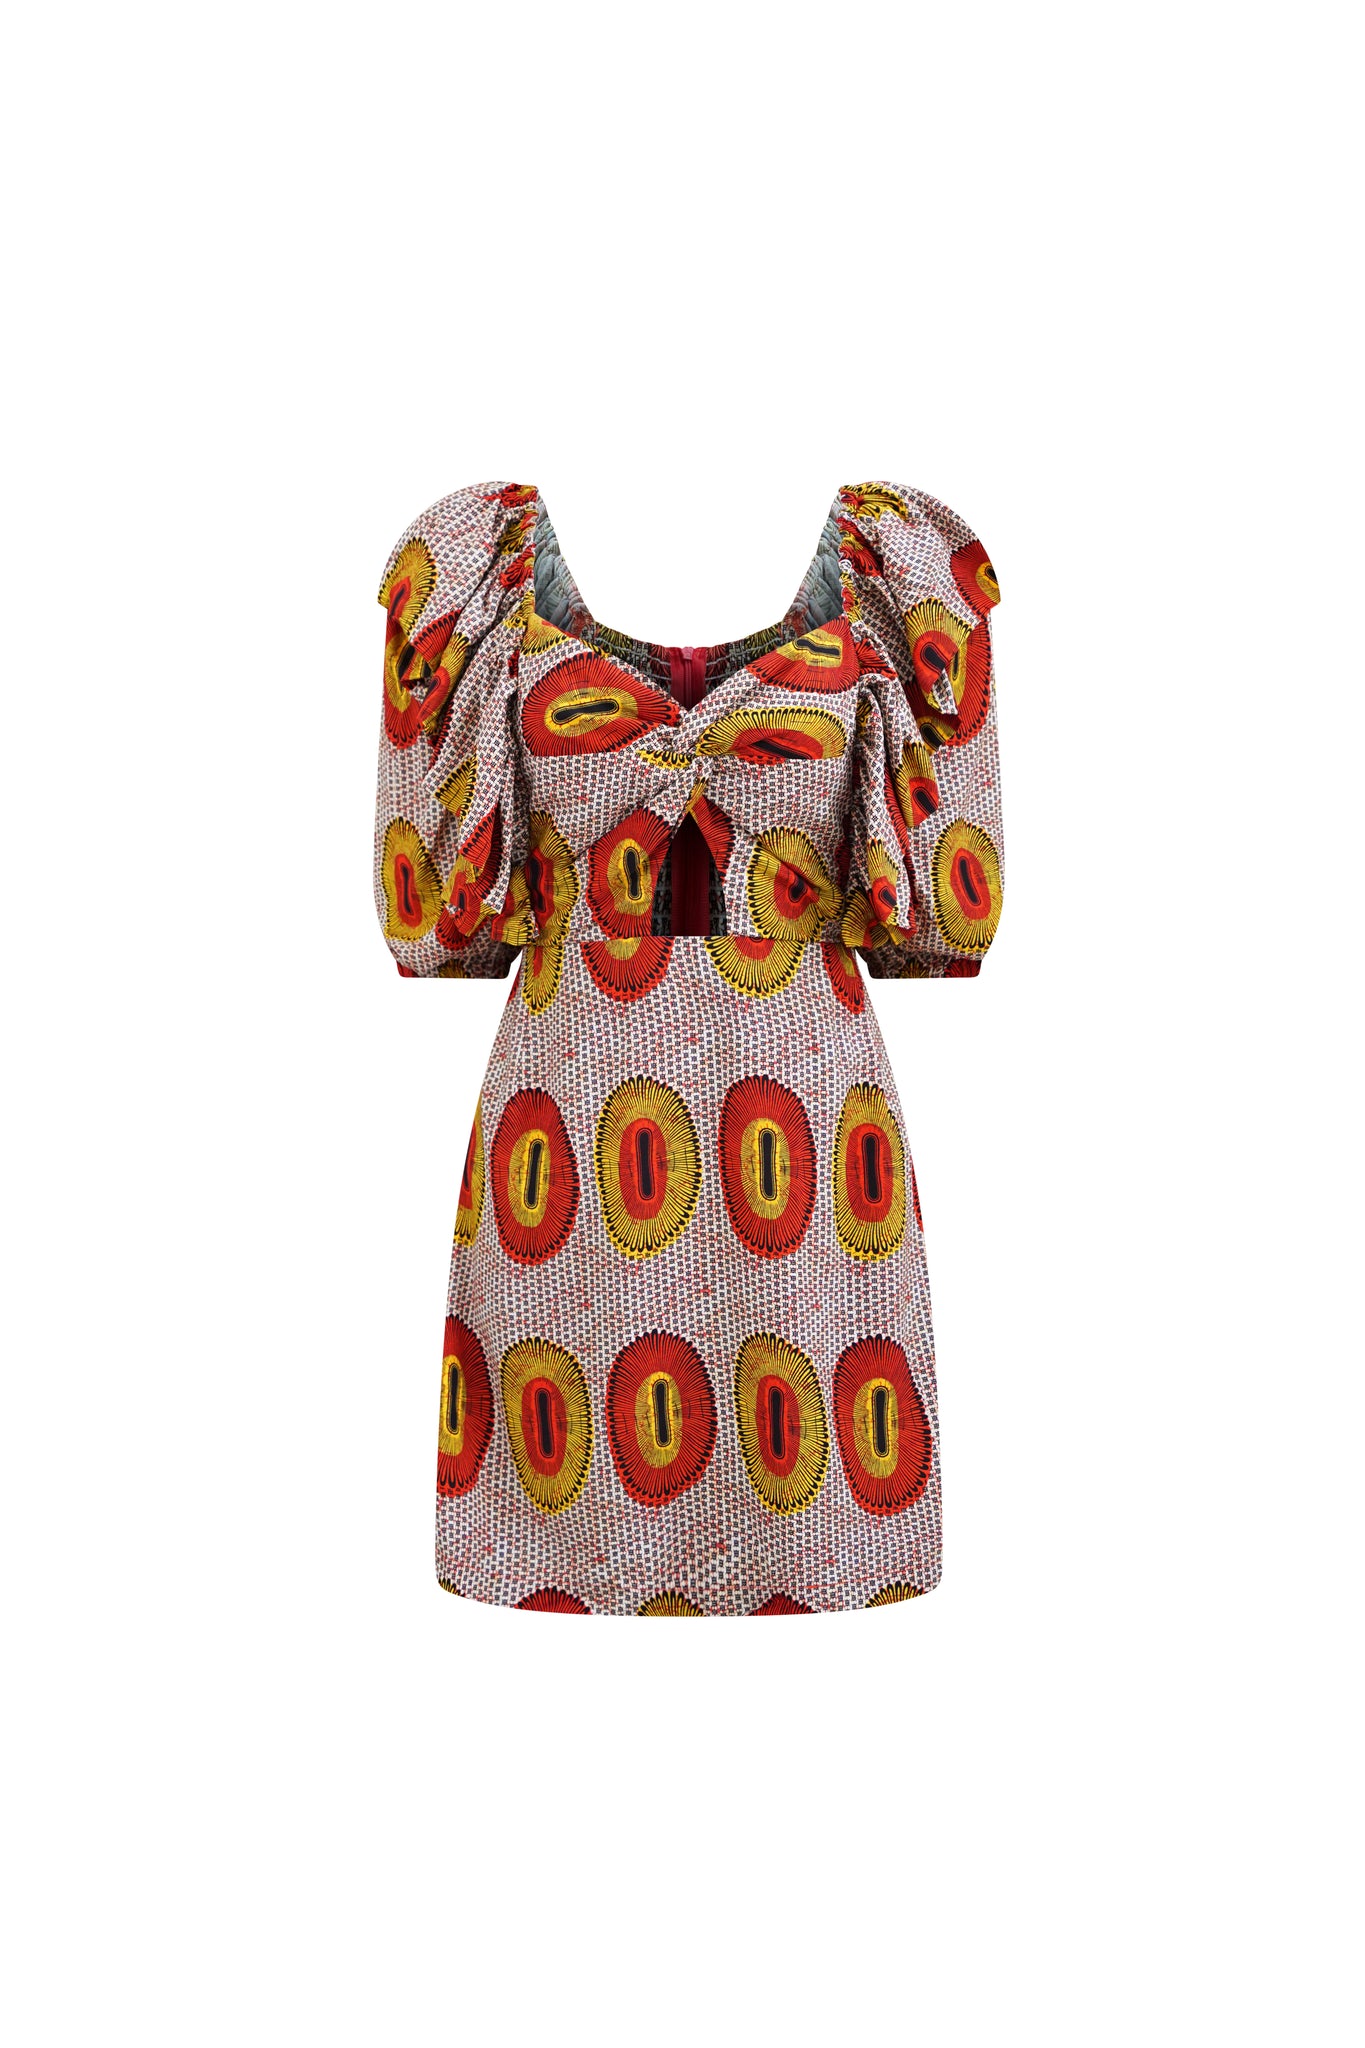 Zalika Mini Dress with Sweetheart Neckline and Twist Detail - Yellow and Orange Rhythmic Spirits Print | ILC OA OG